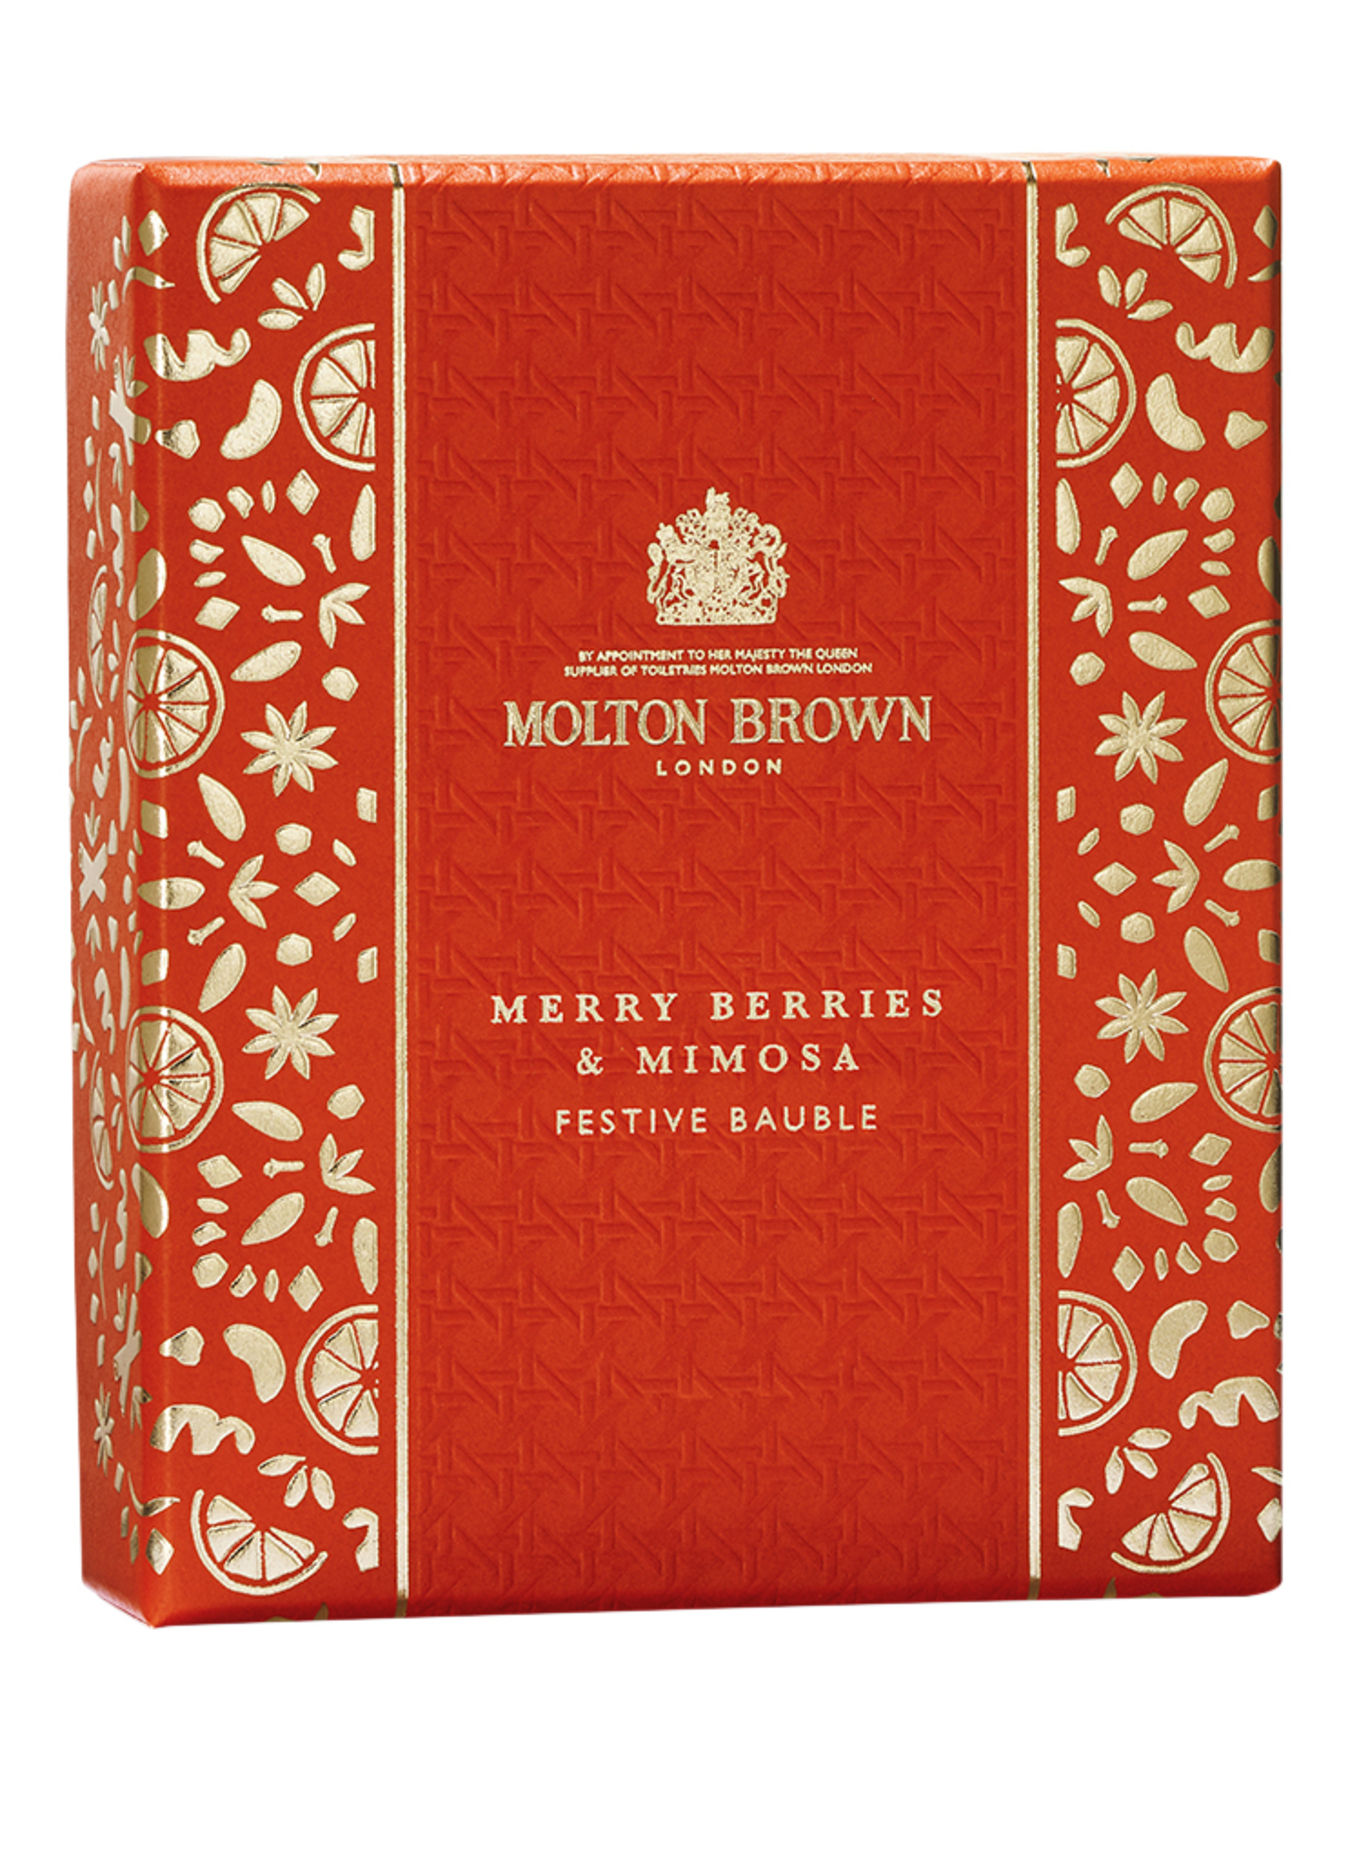 MOLTON BROWN MERRY BERRIES & MIMOSA (Obrázek 2)